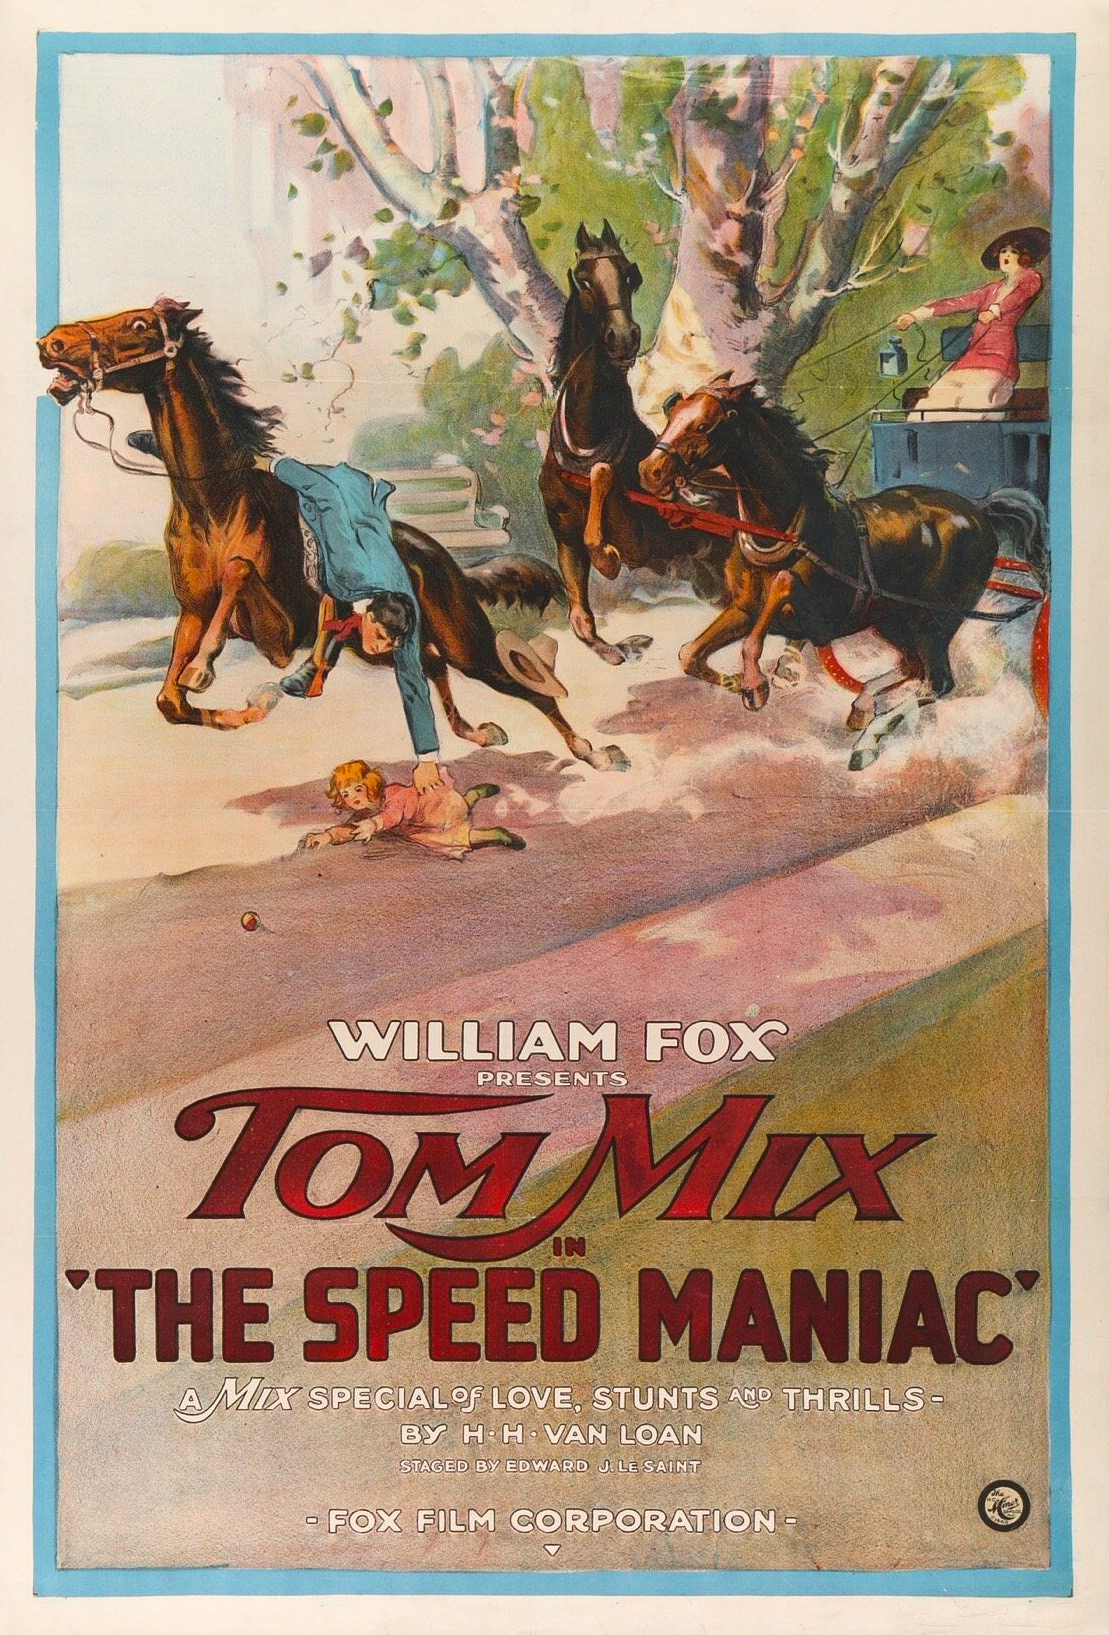 The Speed Maniac